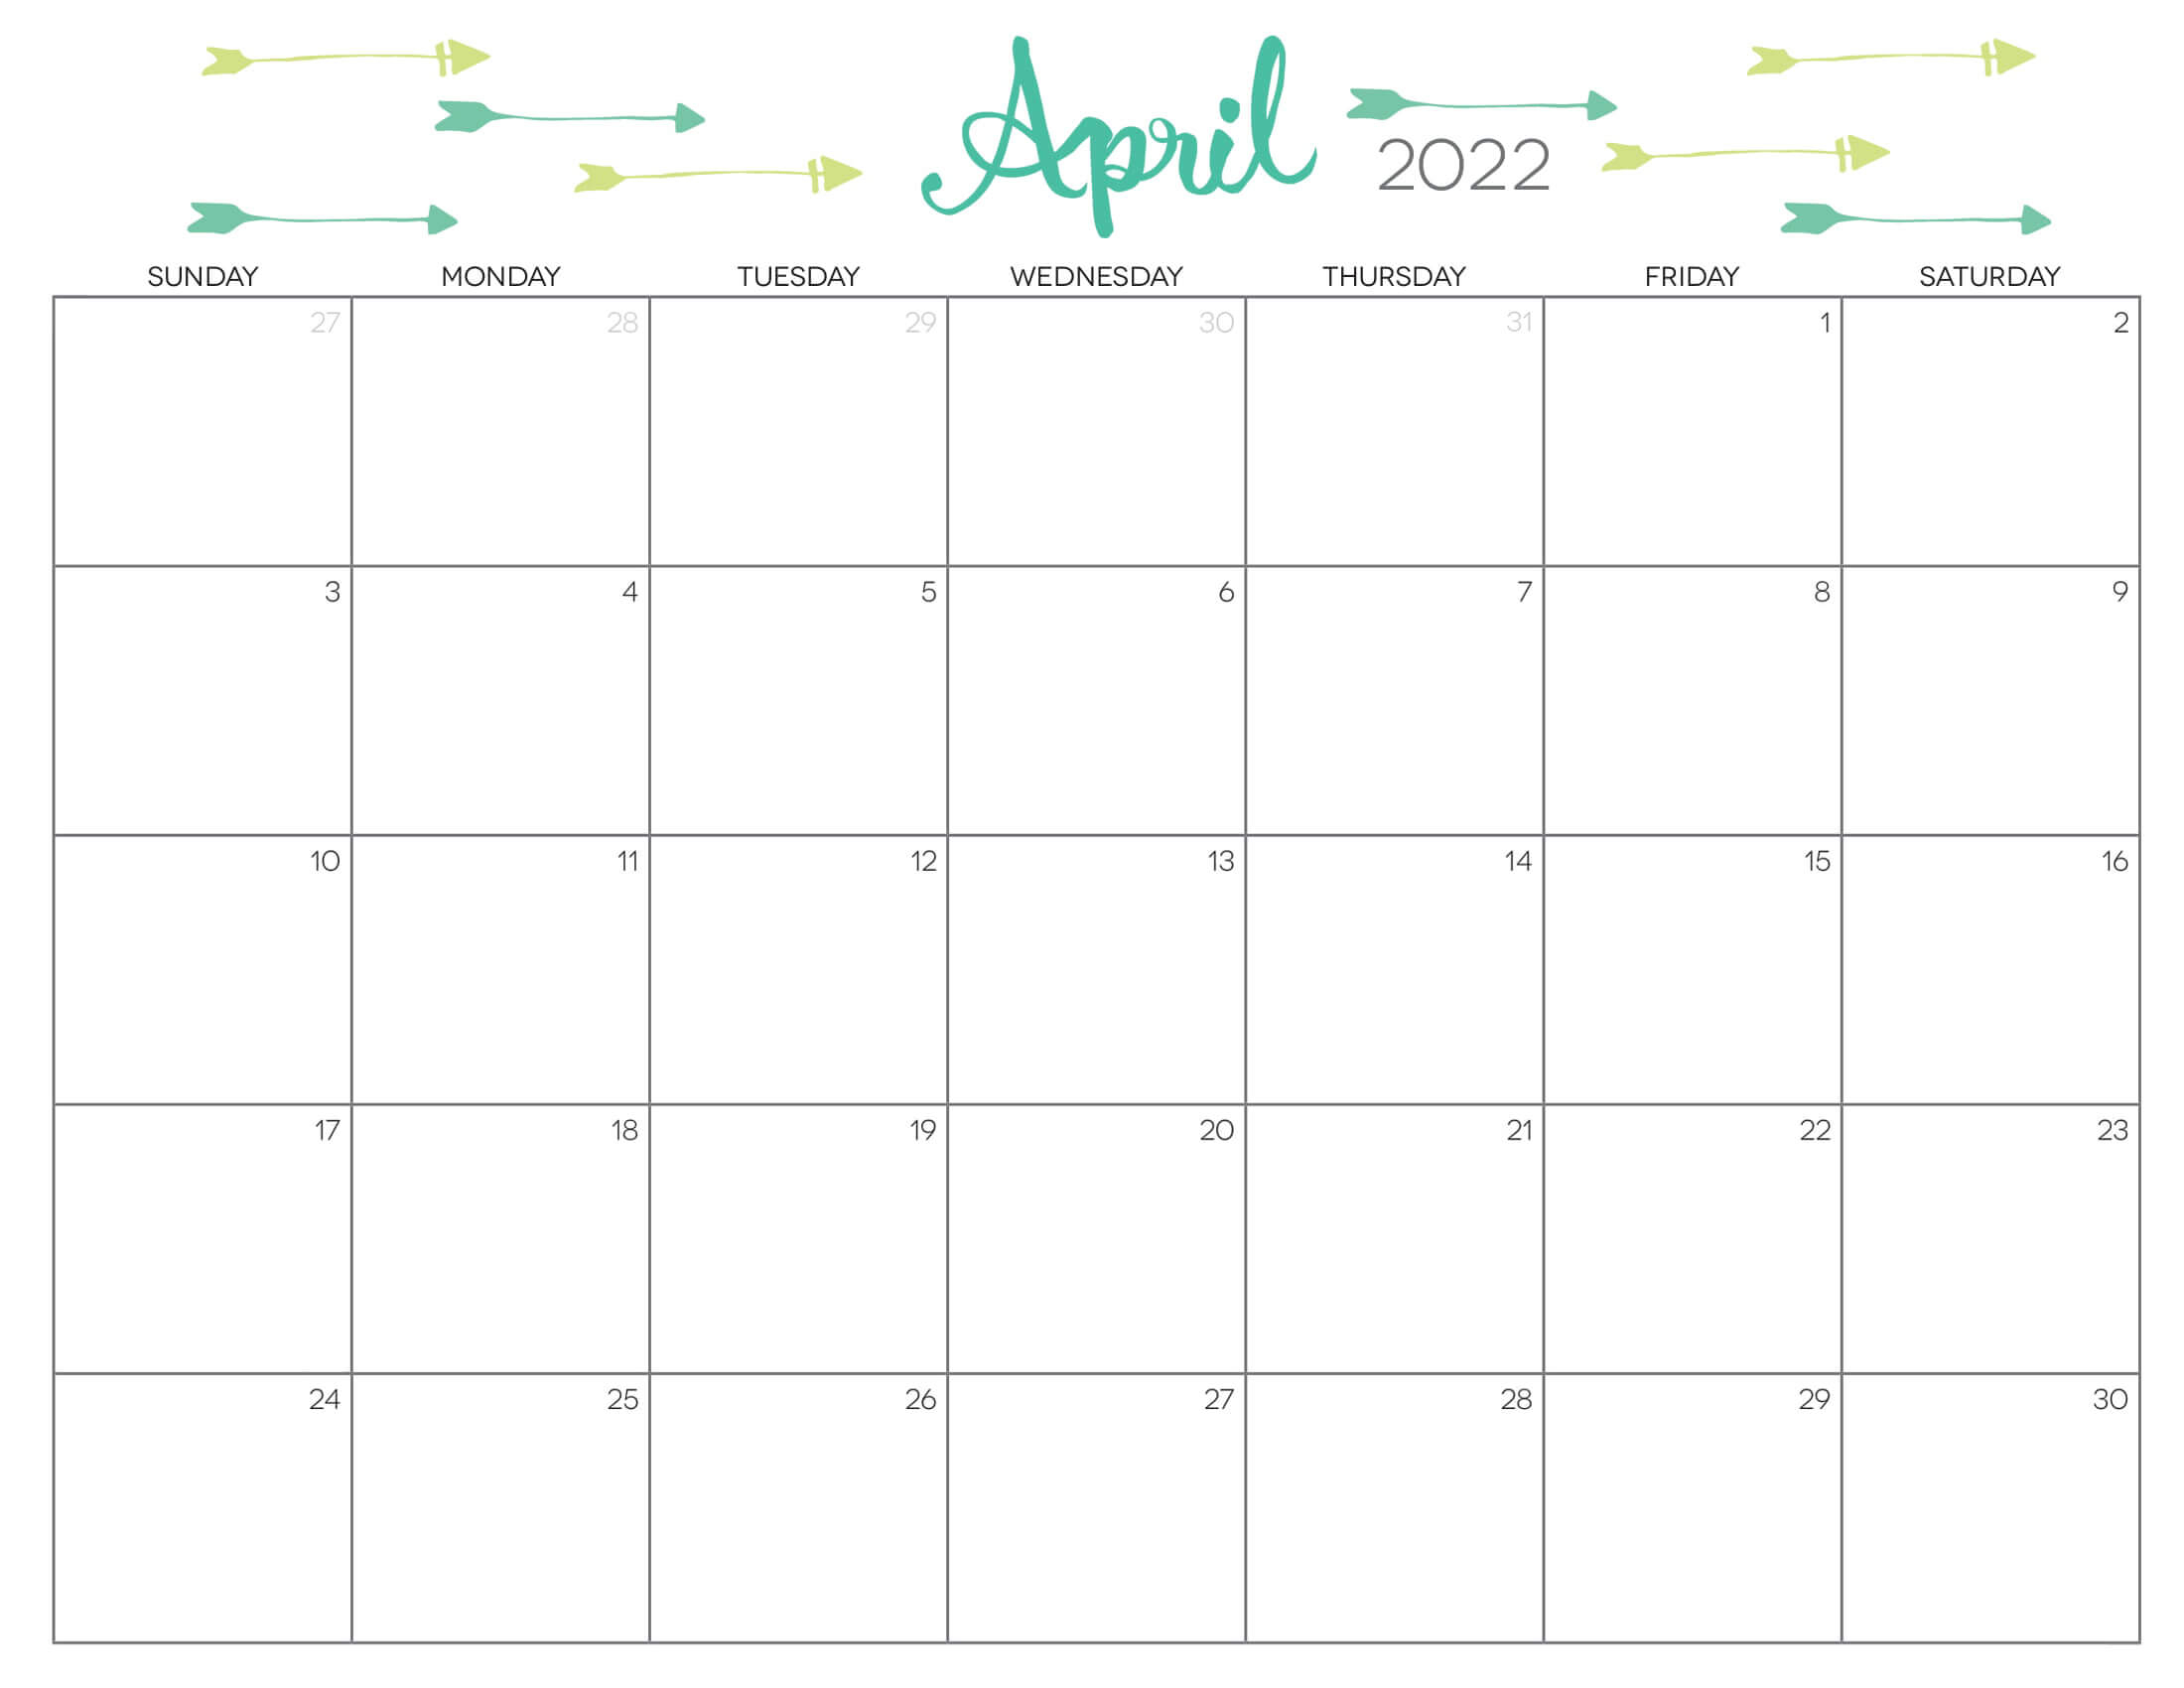 Collect April 2022 Blank Calendar